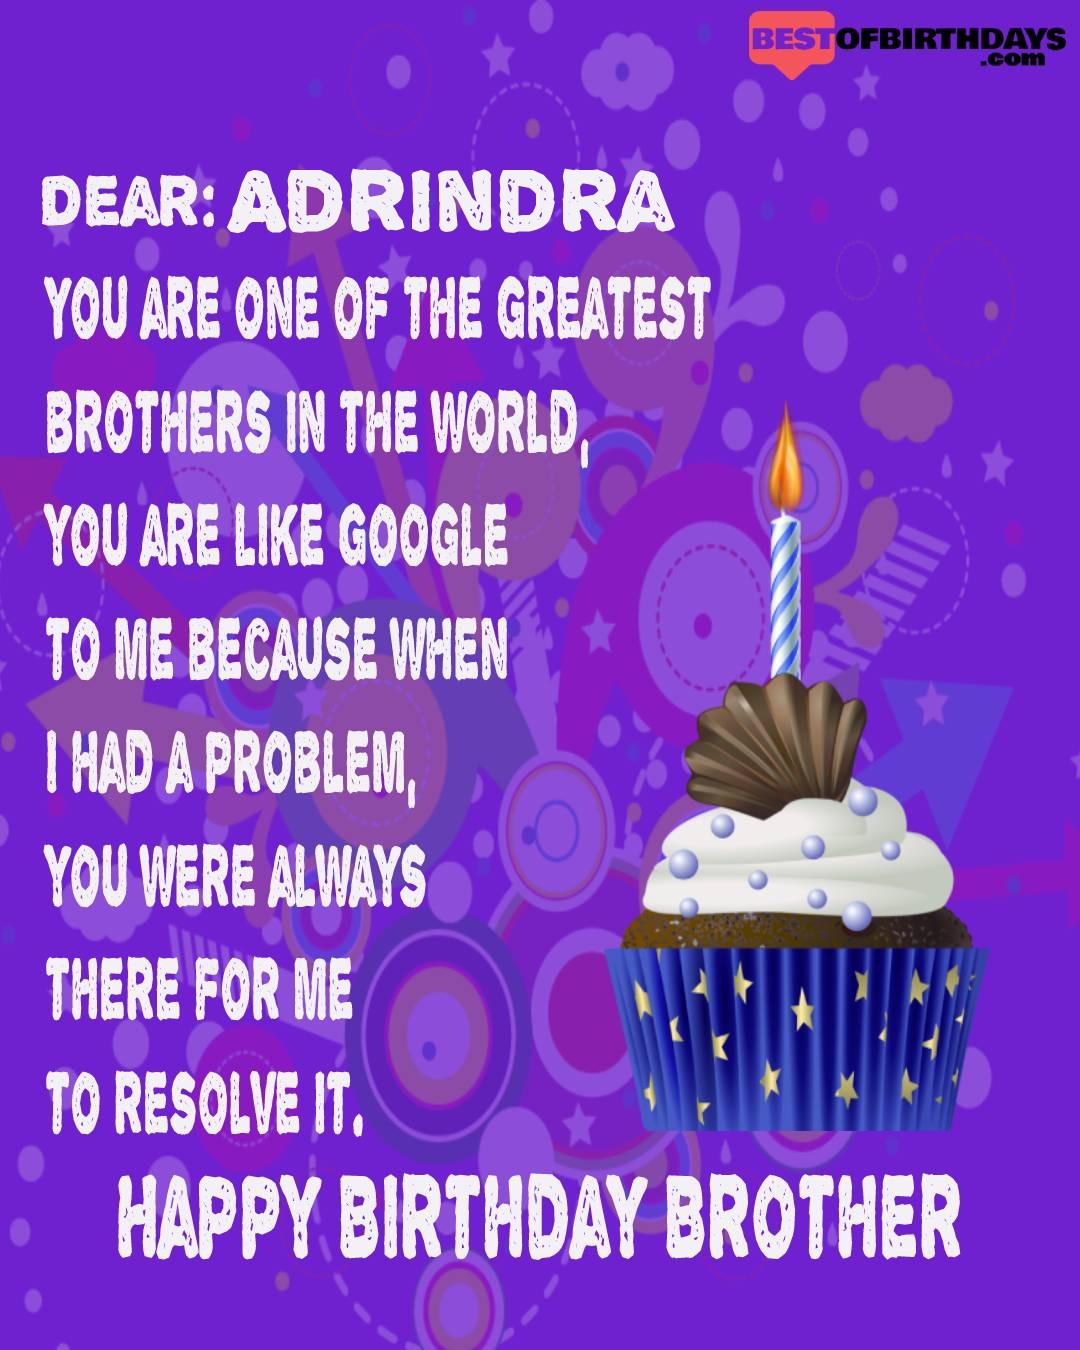 Happy birthday adrindra bhai brother bro